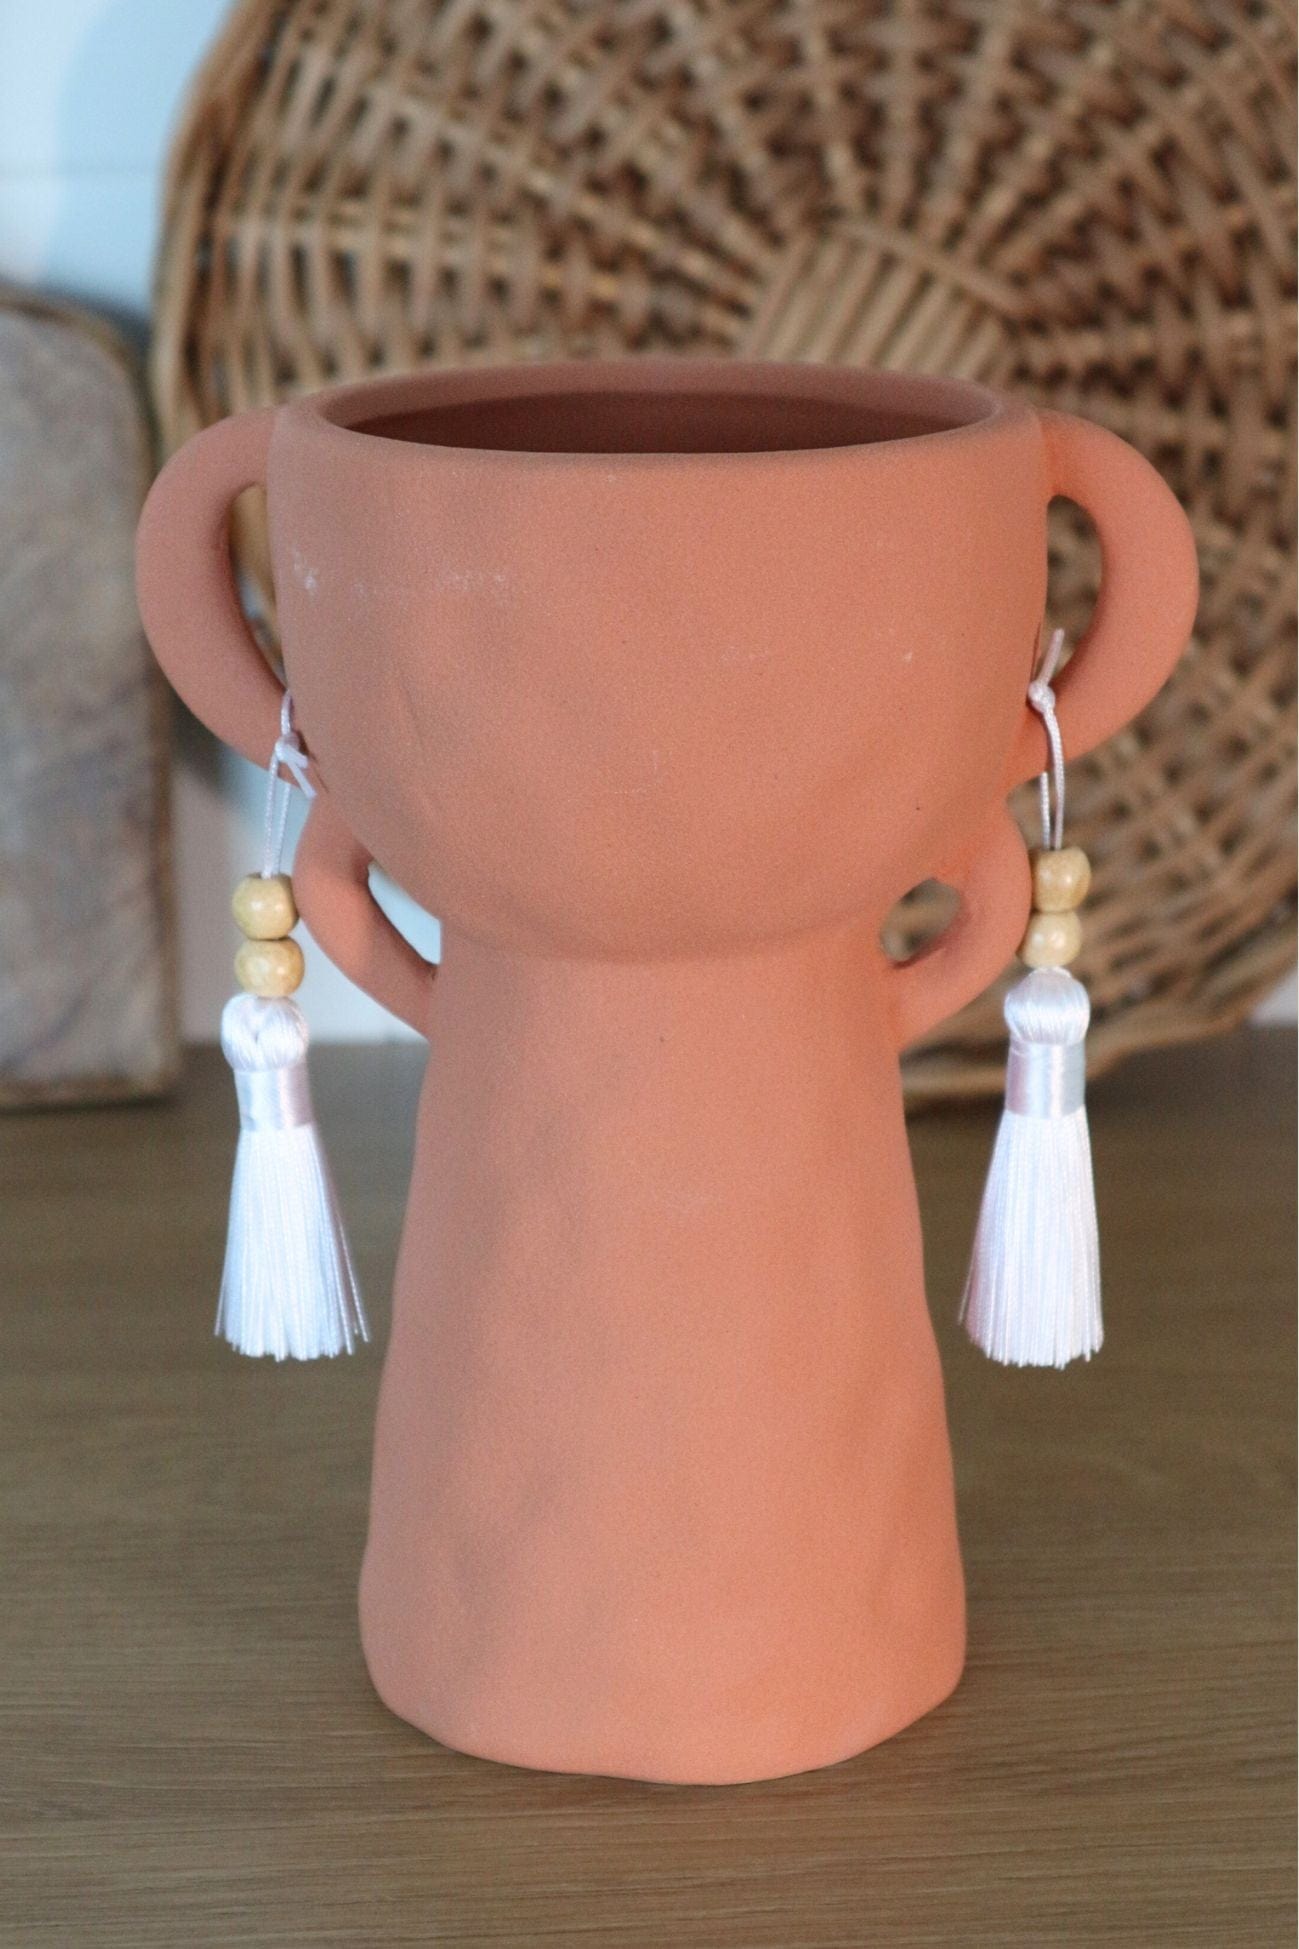 Item International Ayel Ayel - Vaso in ceramica marrone in stile etnico con orecchie | Item International